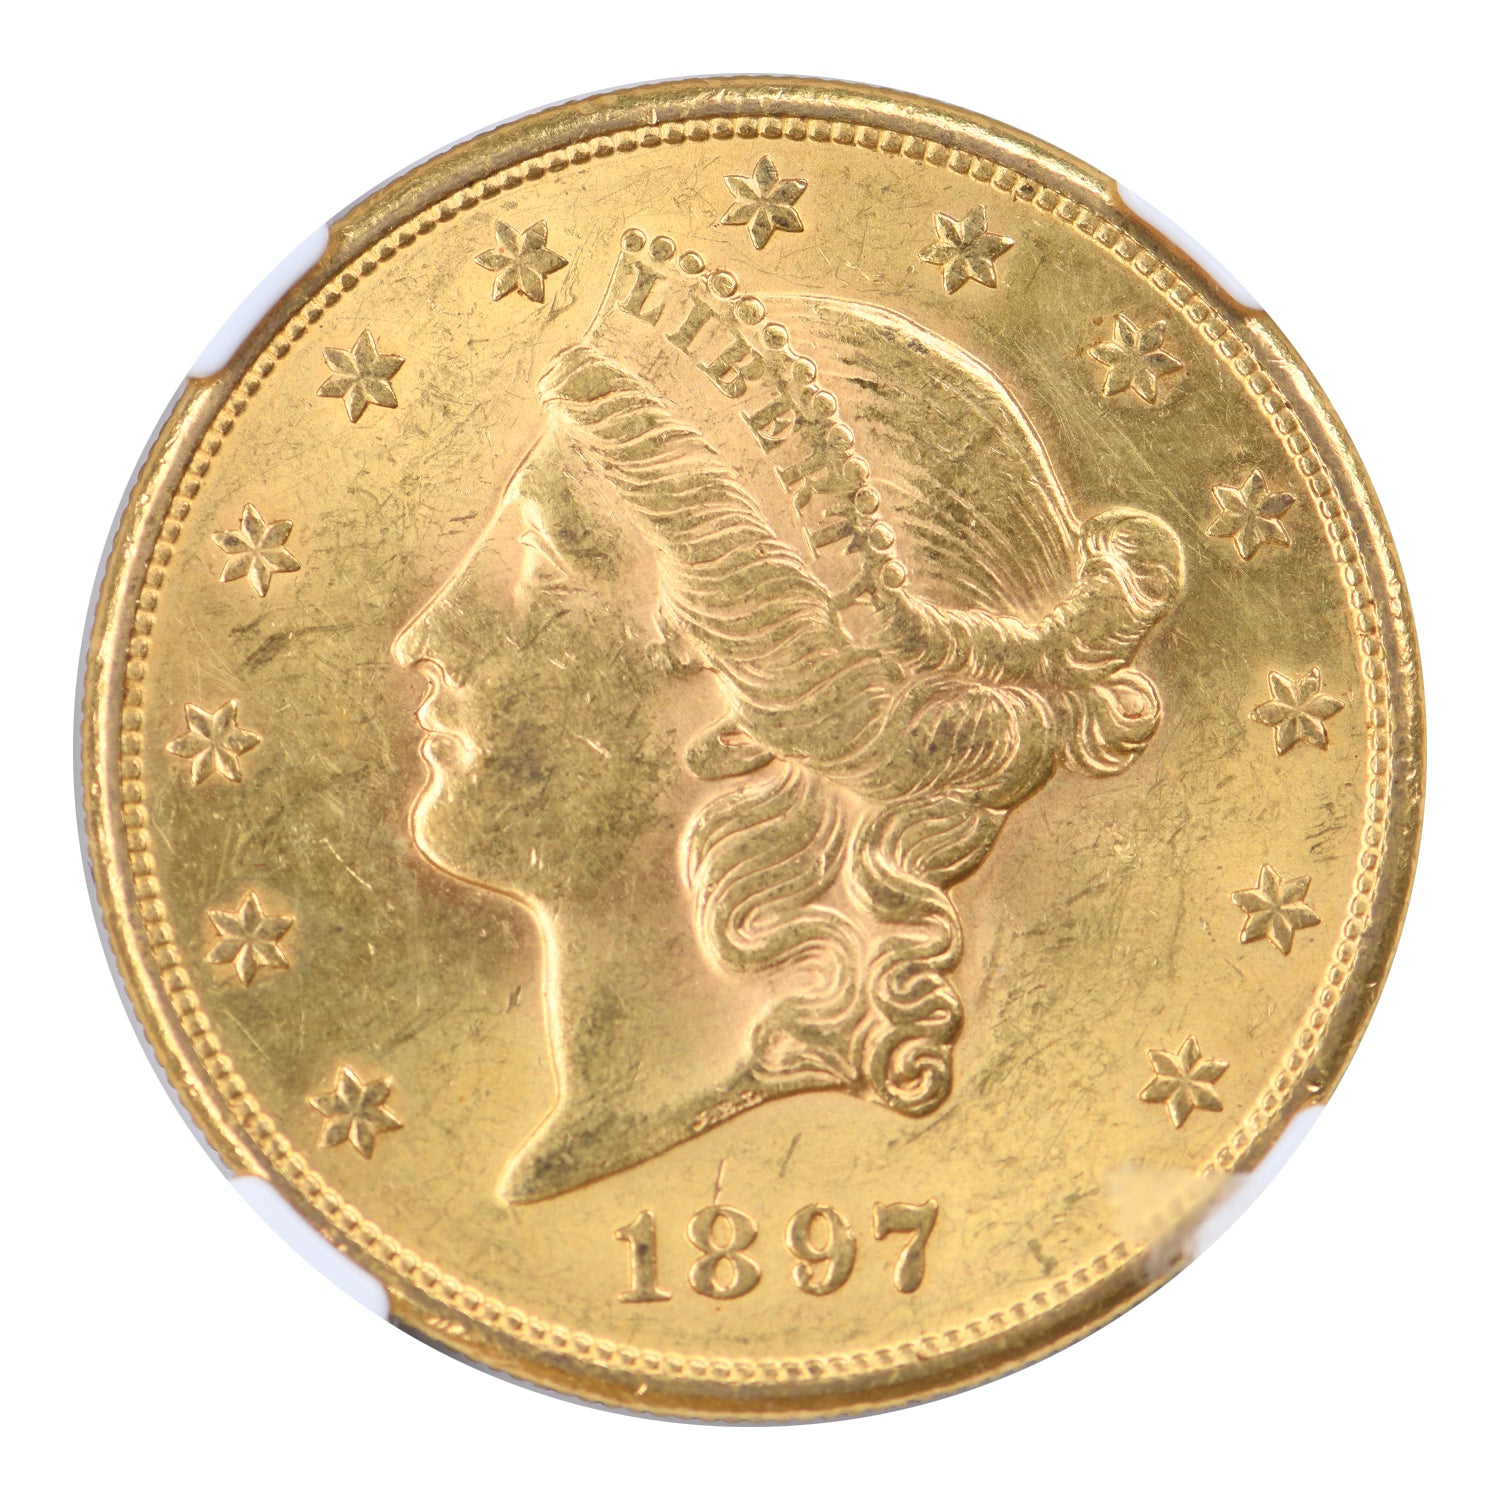 1897-S $20 Gold Liberty Head NGC MS61